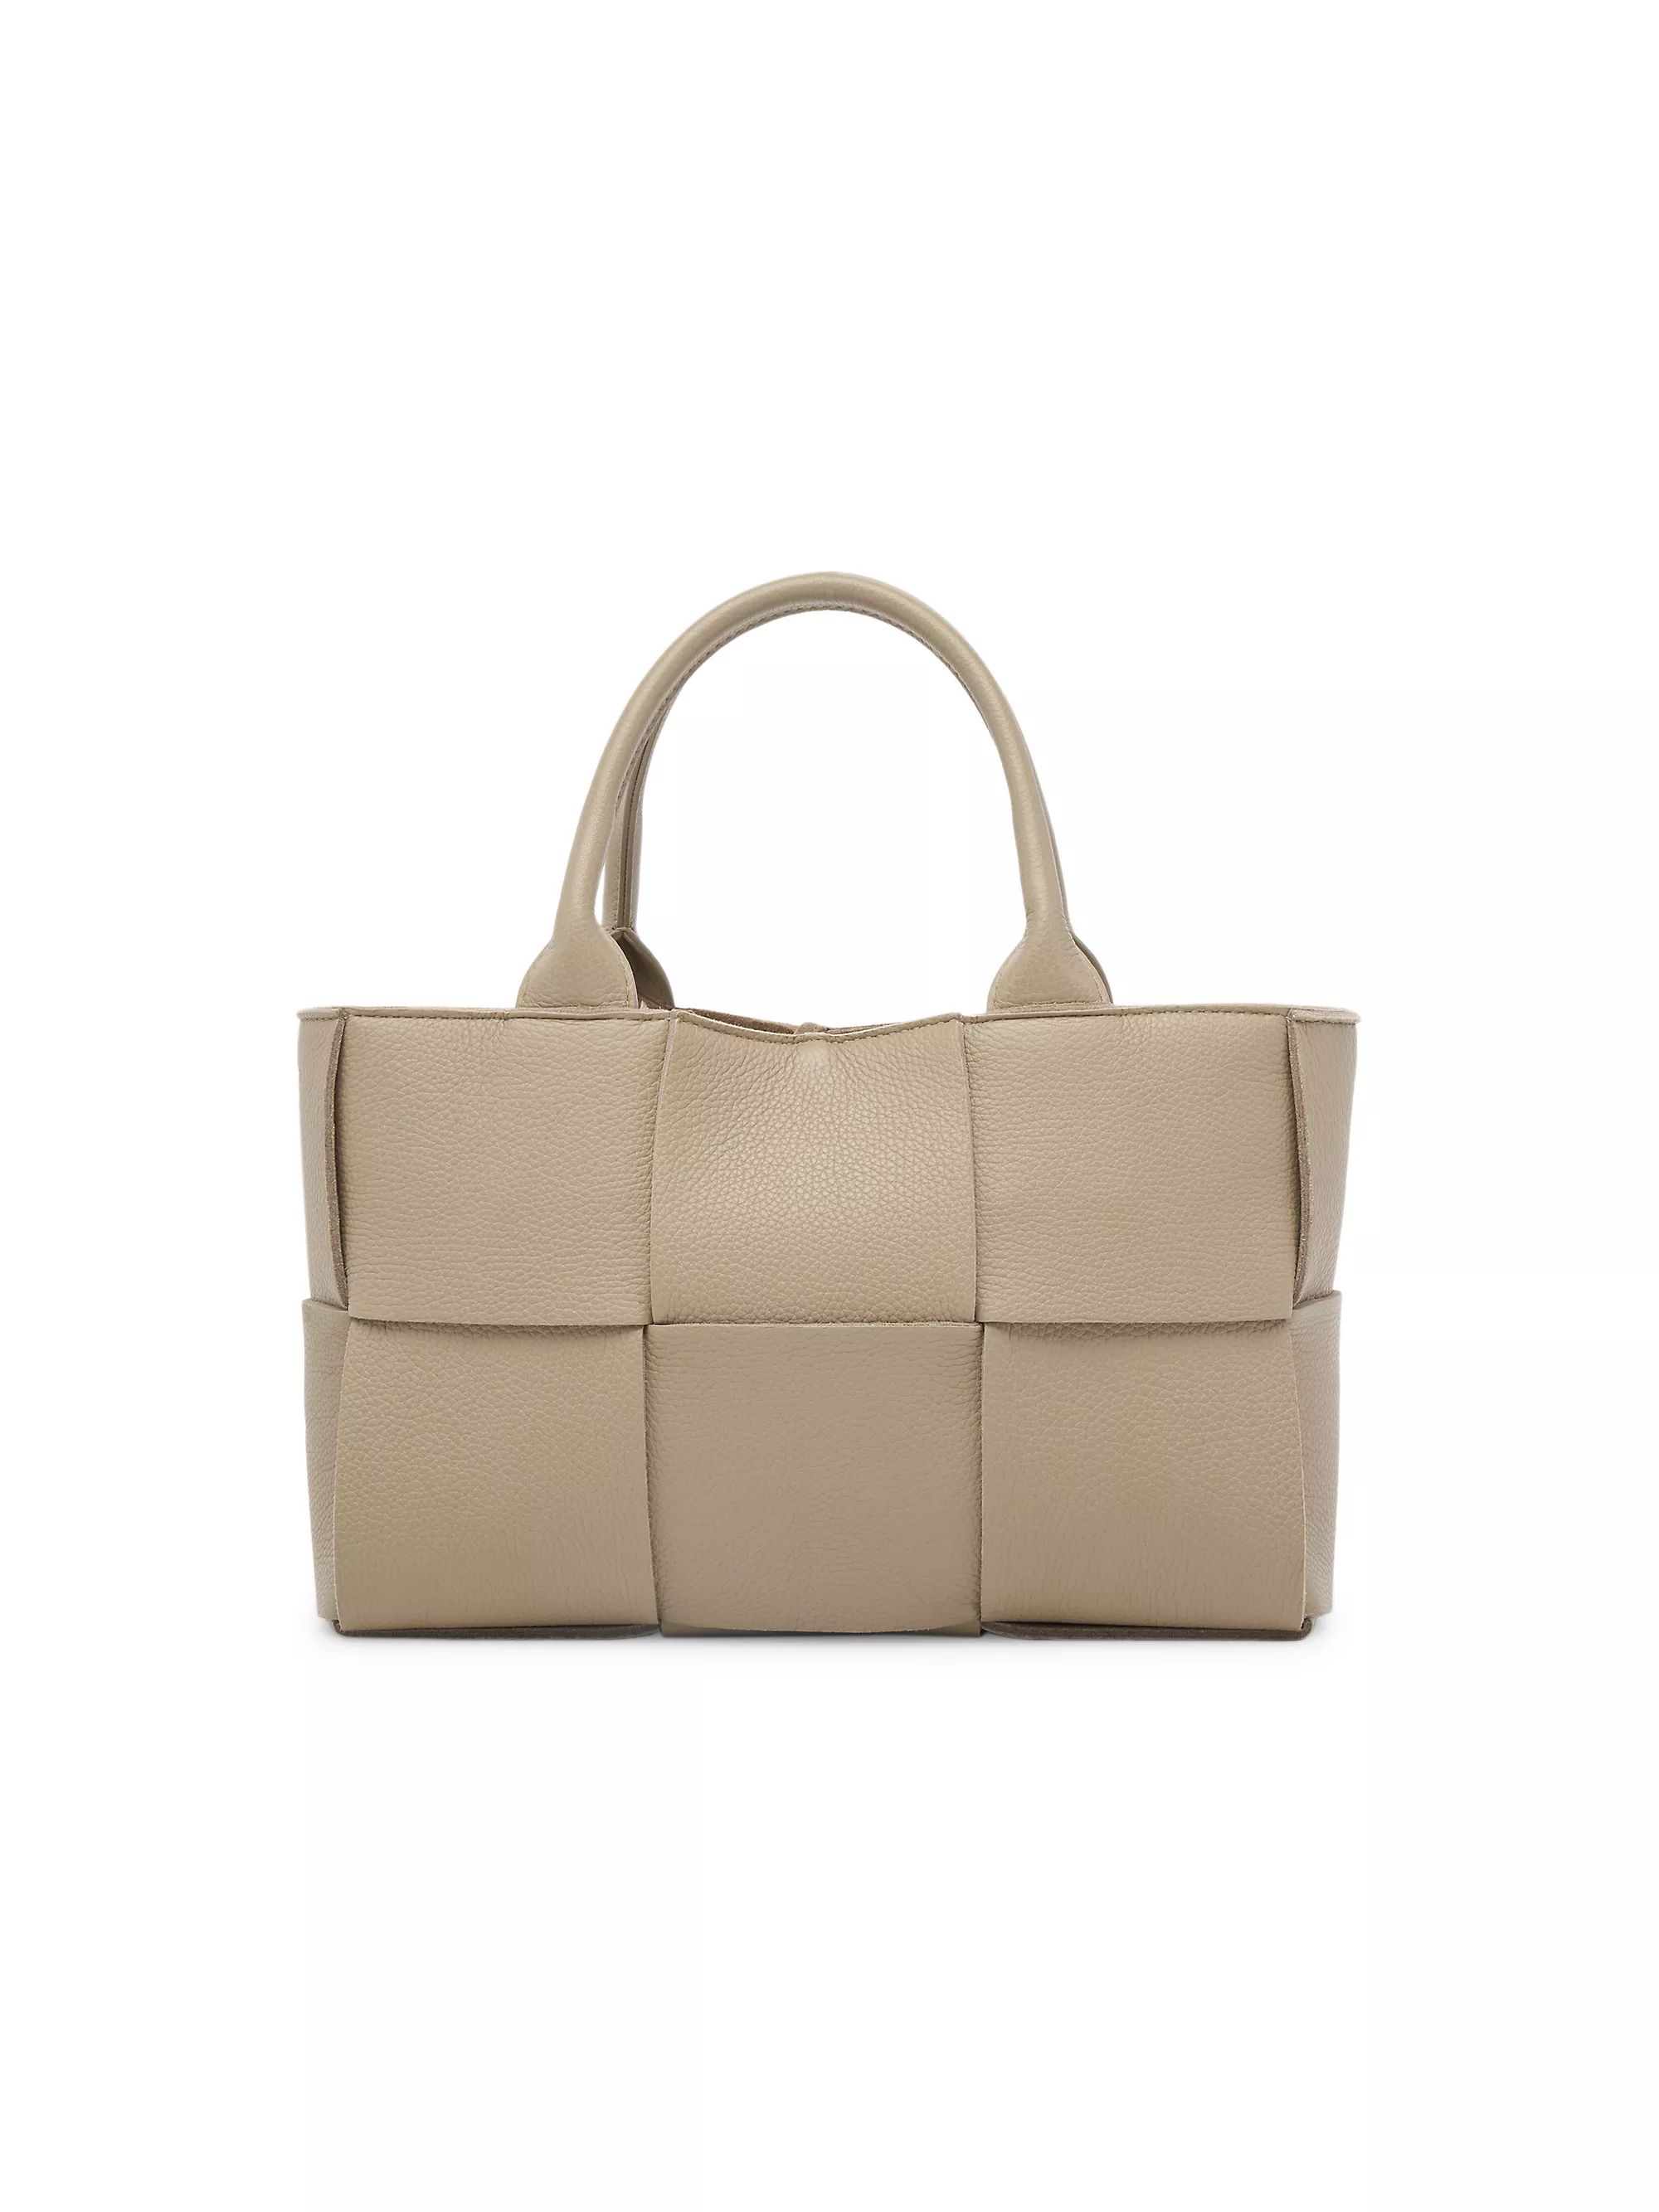 Shop By CategoryTotesBottega VenetaMini Arco Intreccio Leather Tote Bag$2,900 | Saks Fifth Avenue